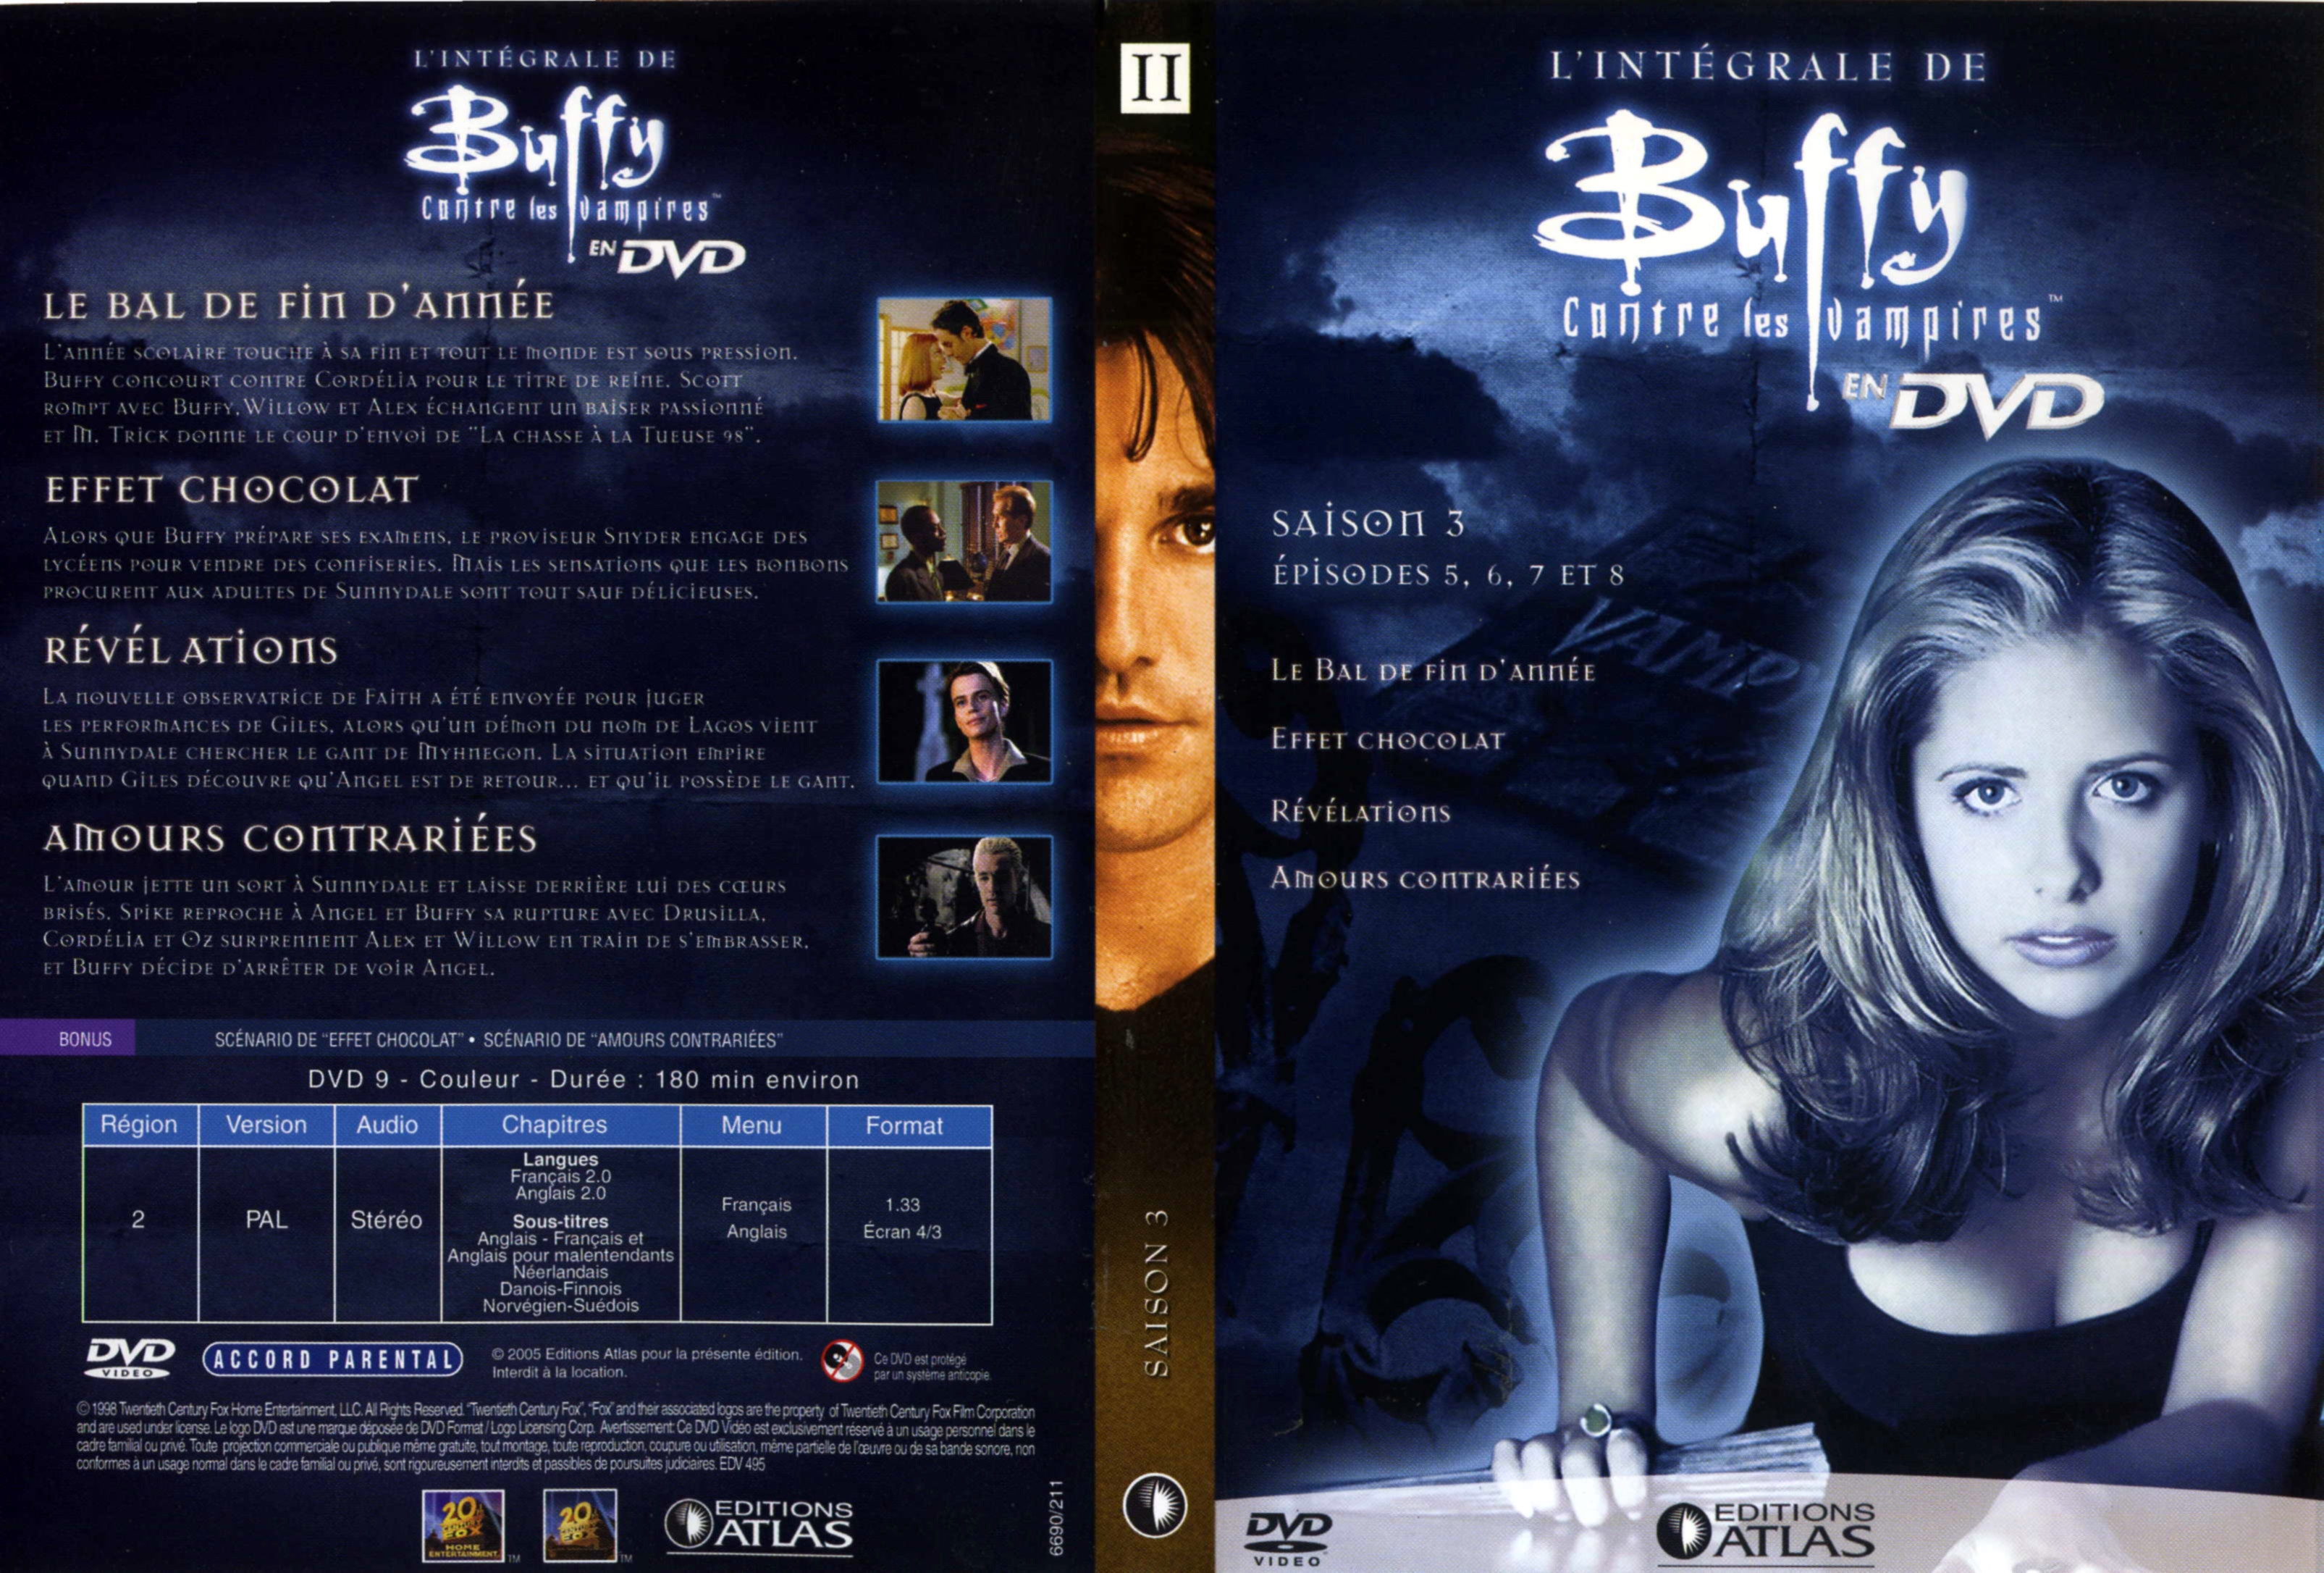 Jaquette DVD Buffy contre les vampires DVD 11 Ed Atlas